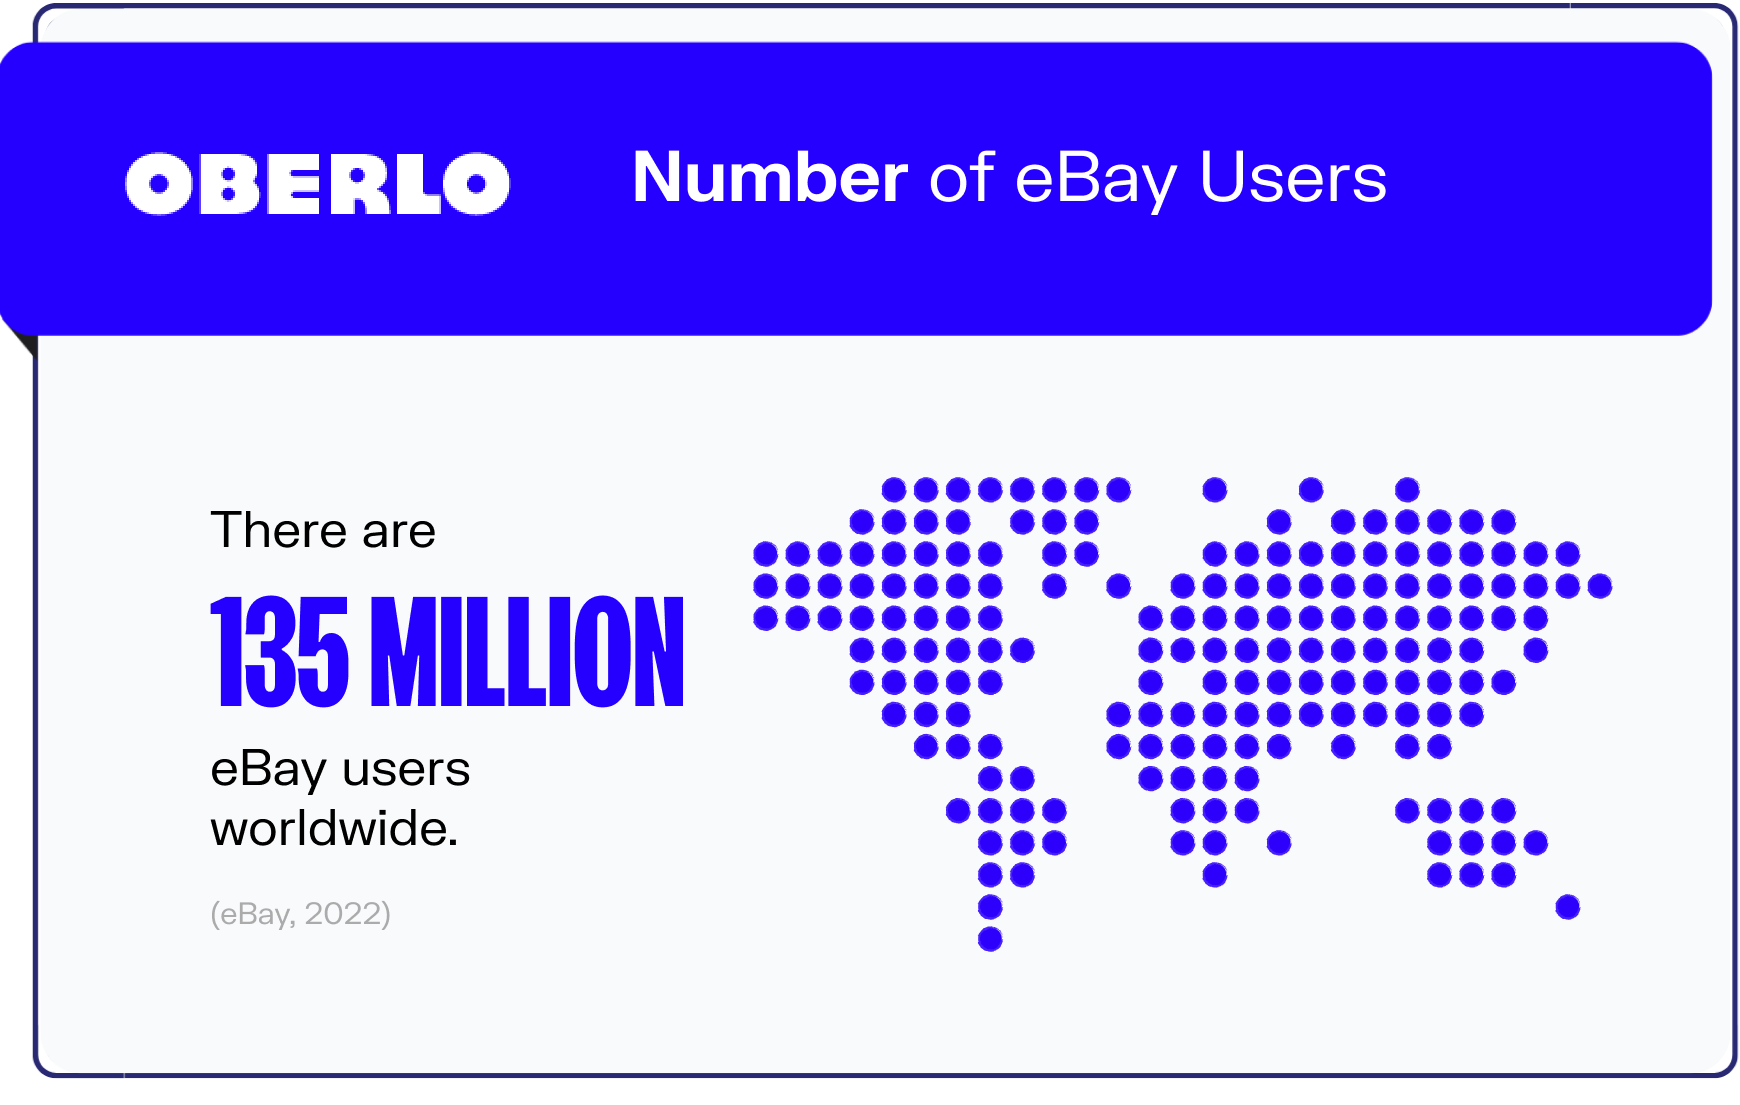 ebay statistics graphic1